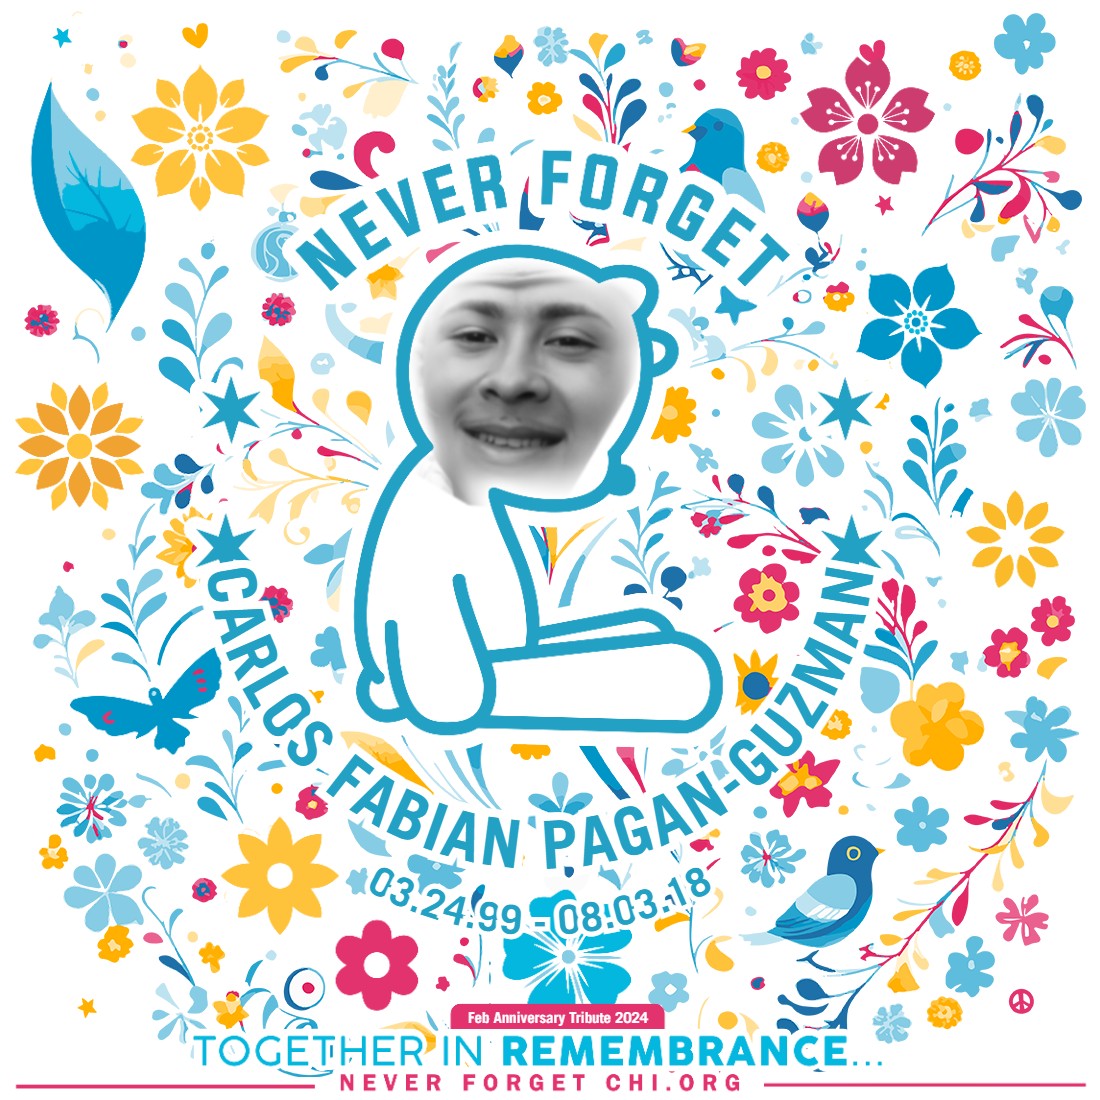 Carlos Fabian Pagan-Guzman